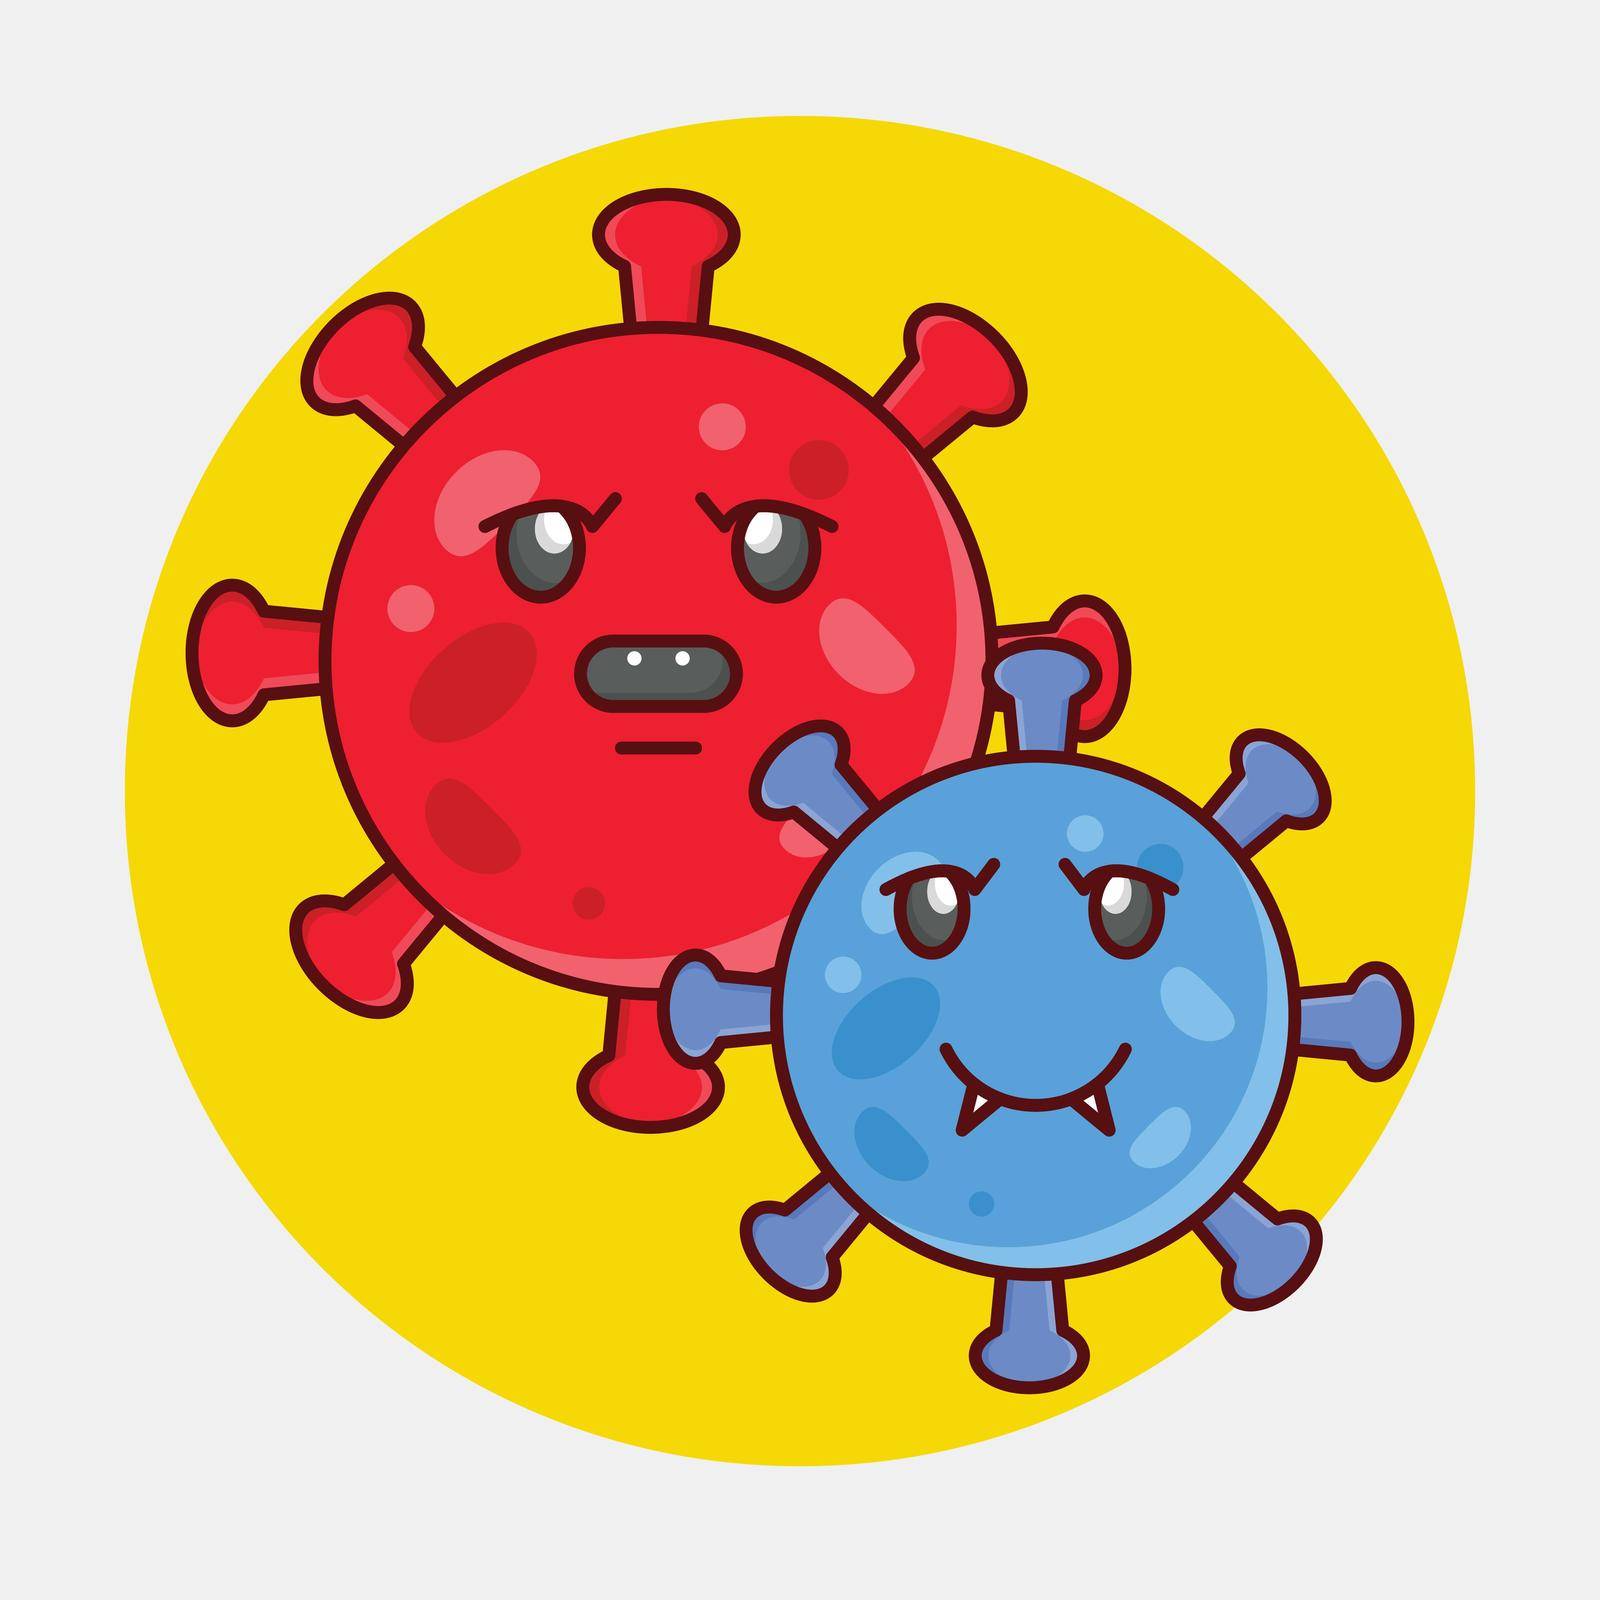 virus by FlaticonsDesign